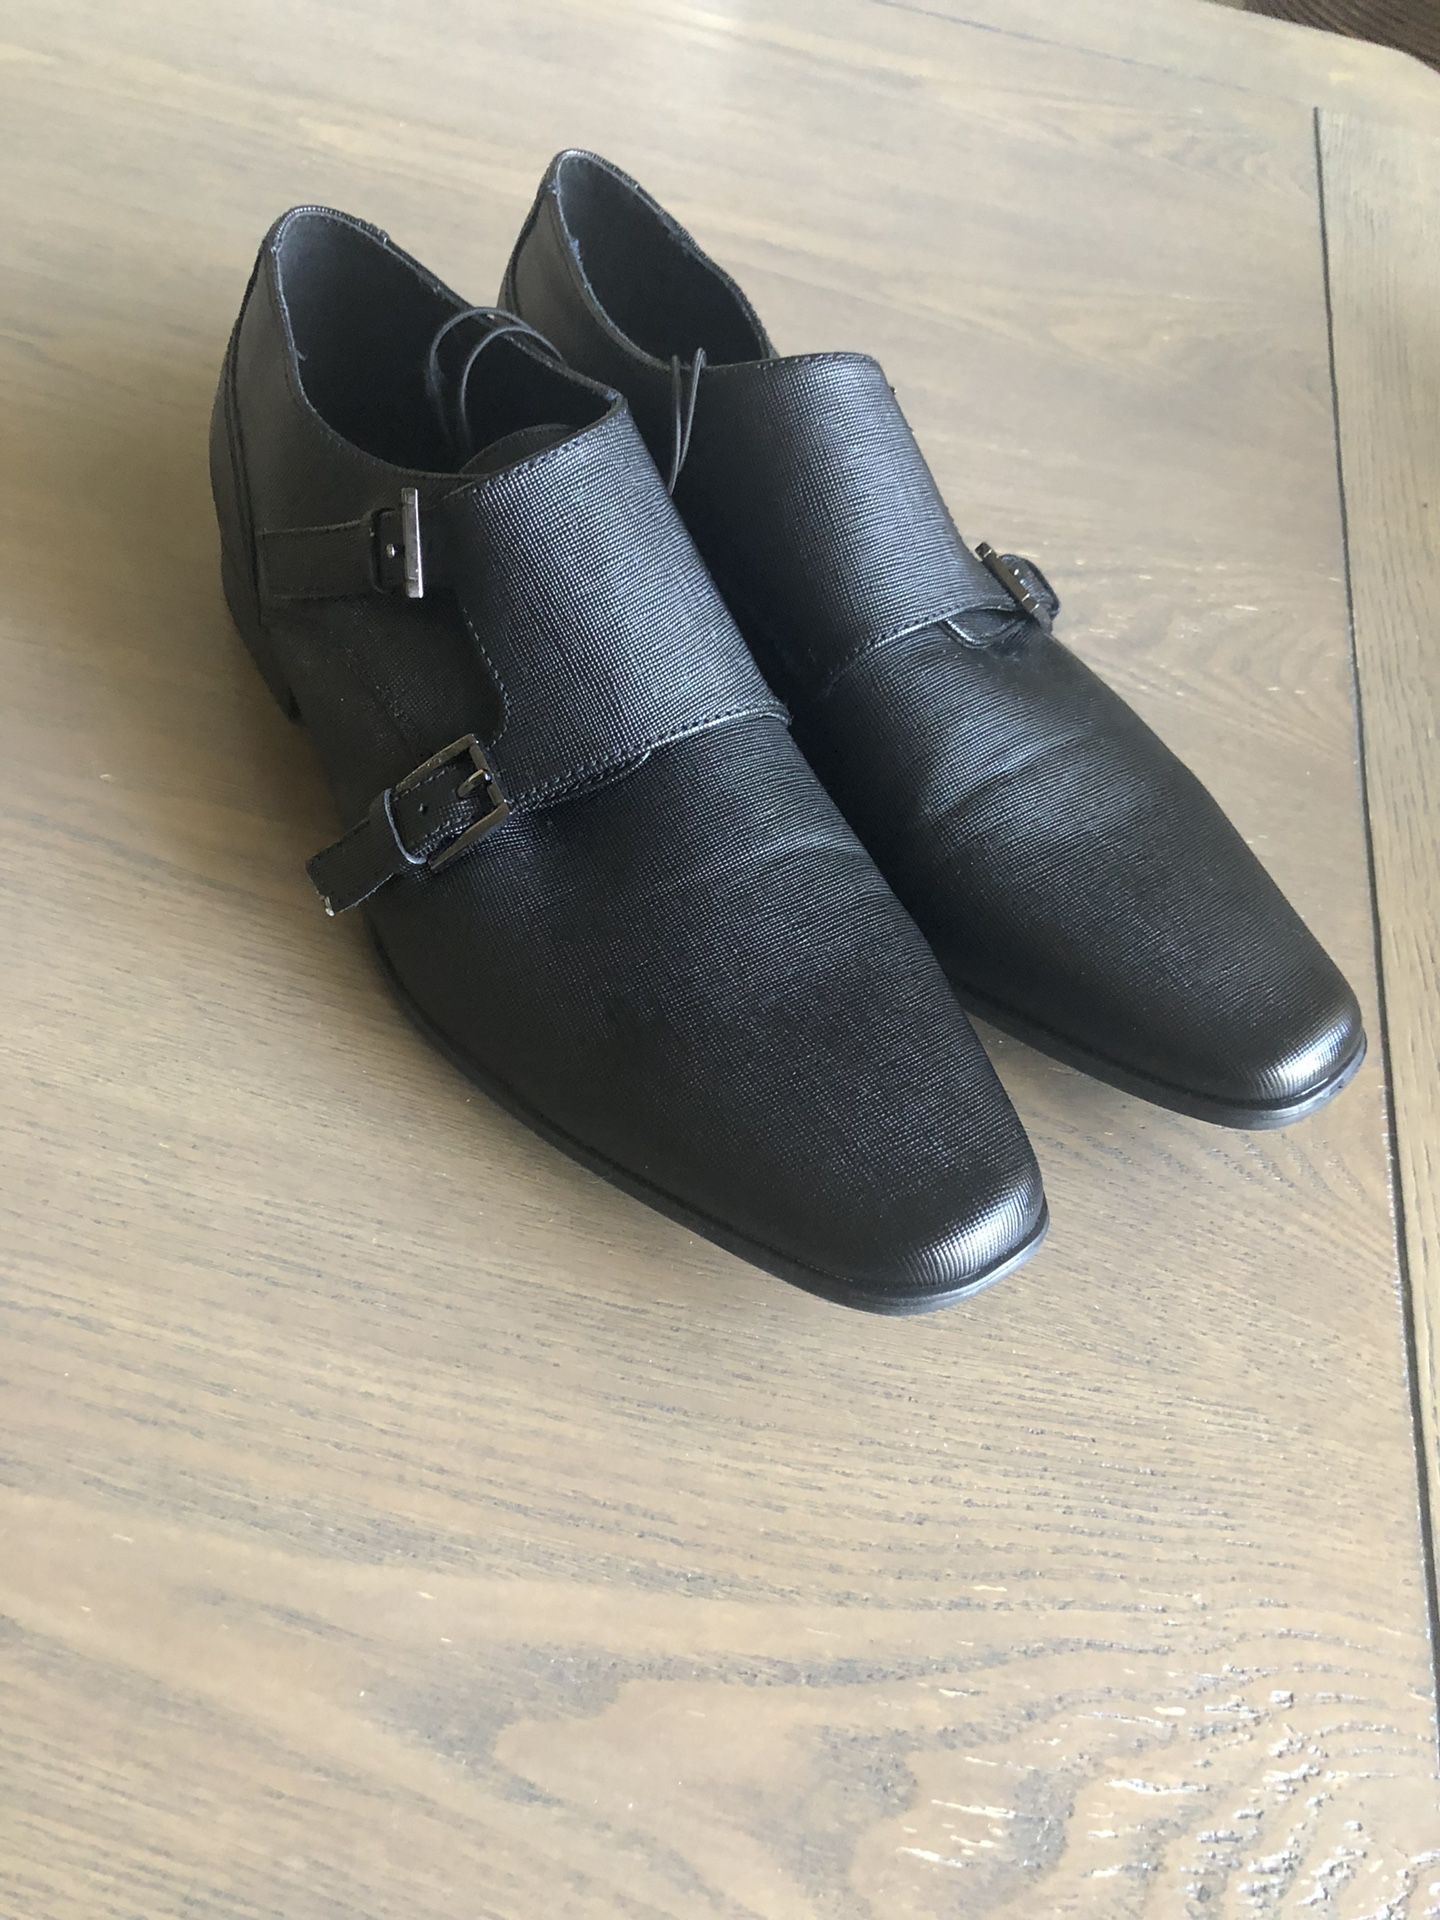 Men’s Dress Shoe Size 10 1/2